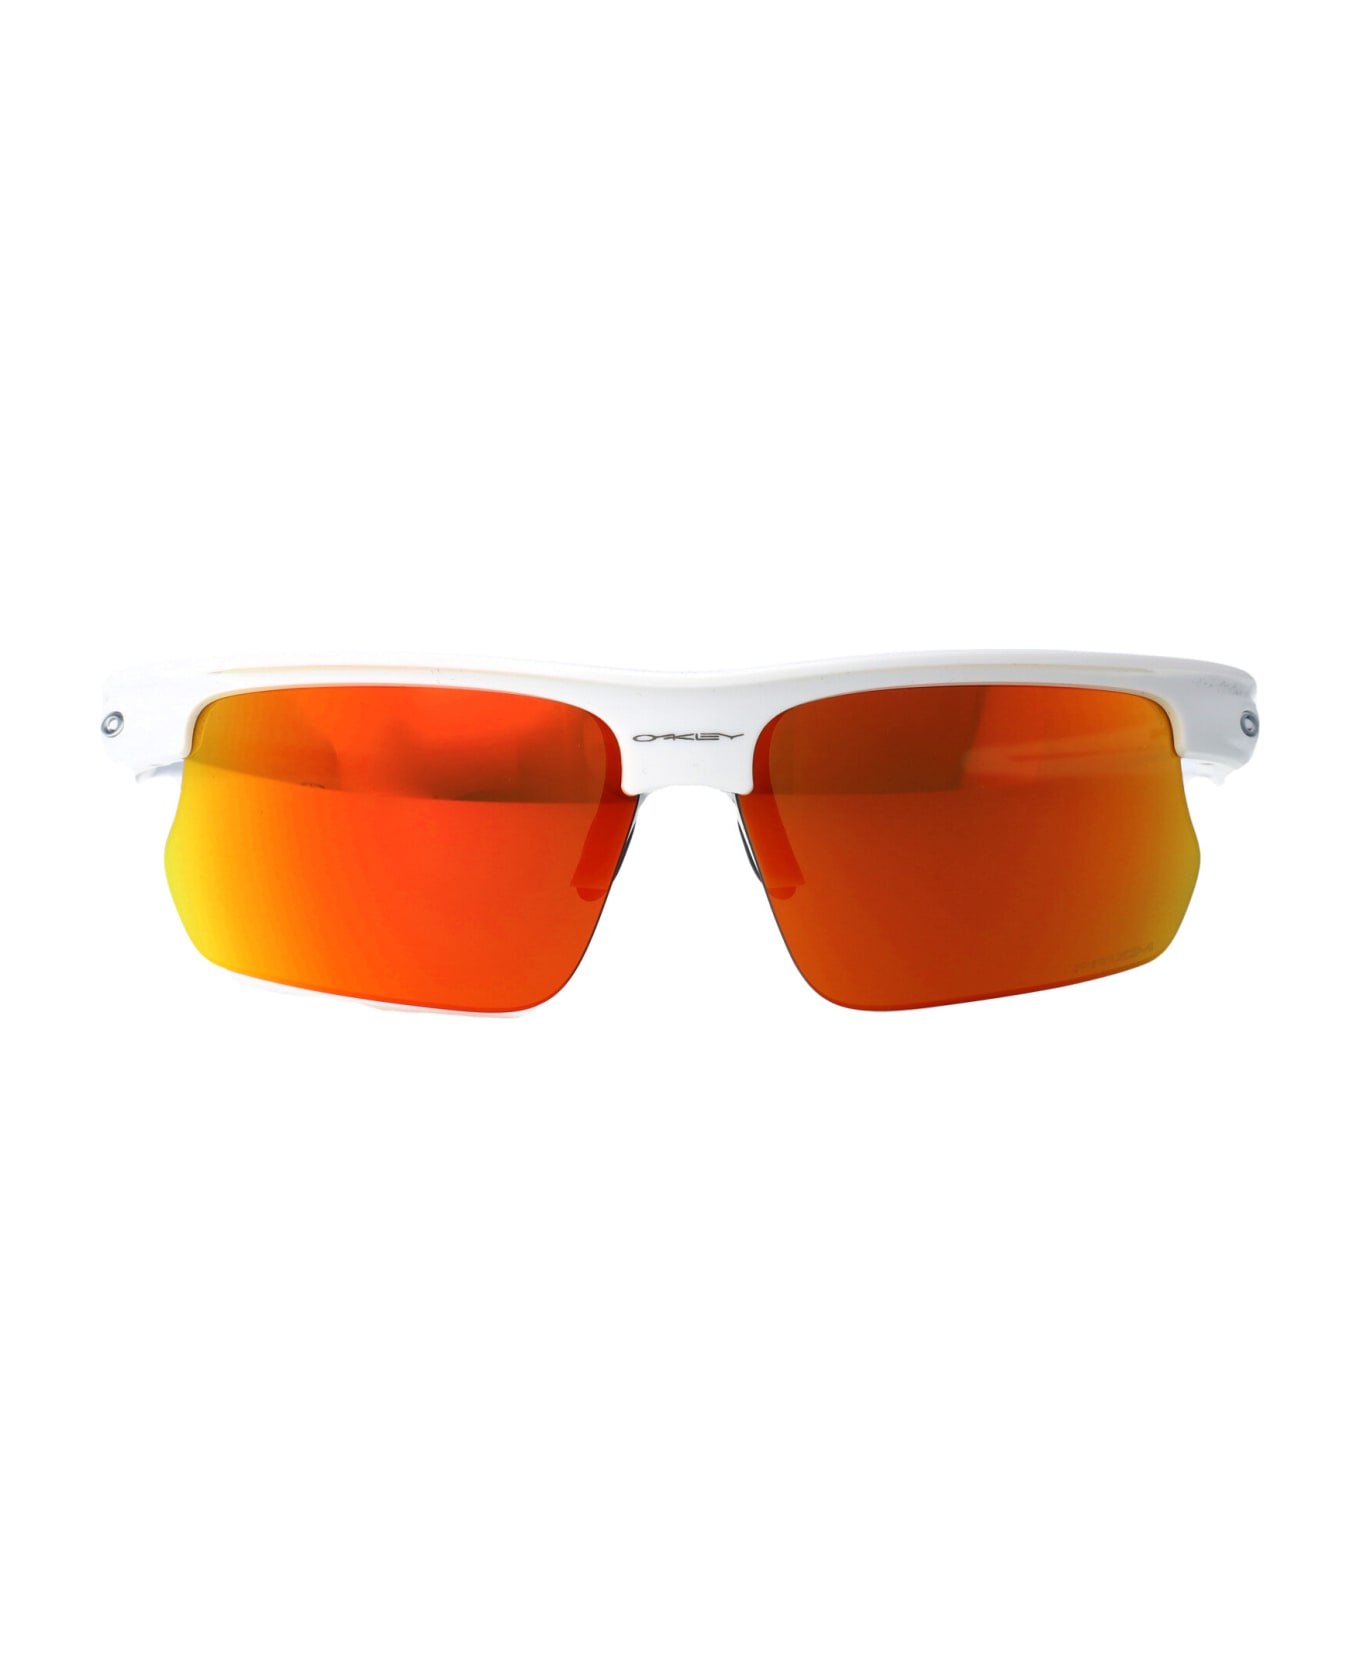 Oakley Bisphaera Sunglasses - 940003 Polished White